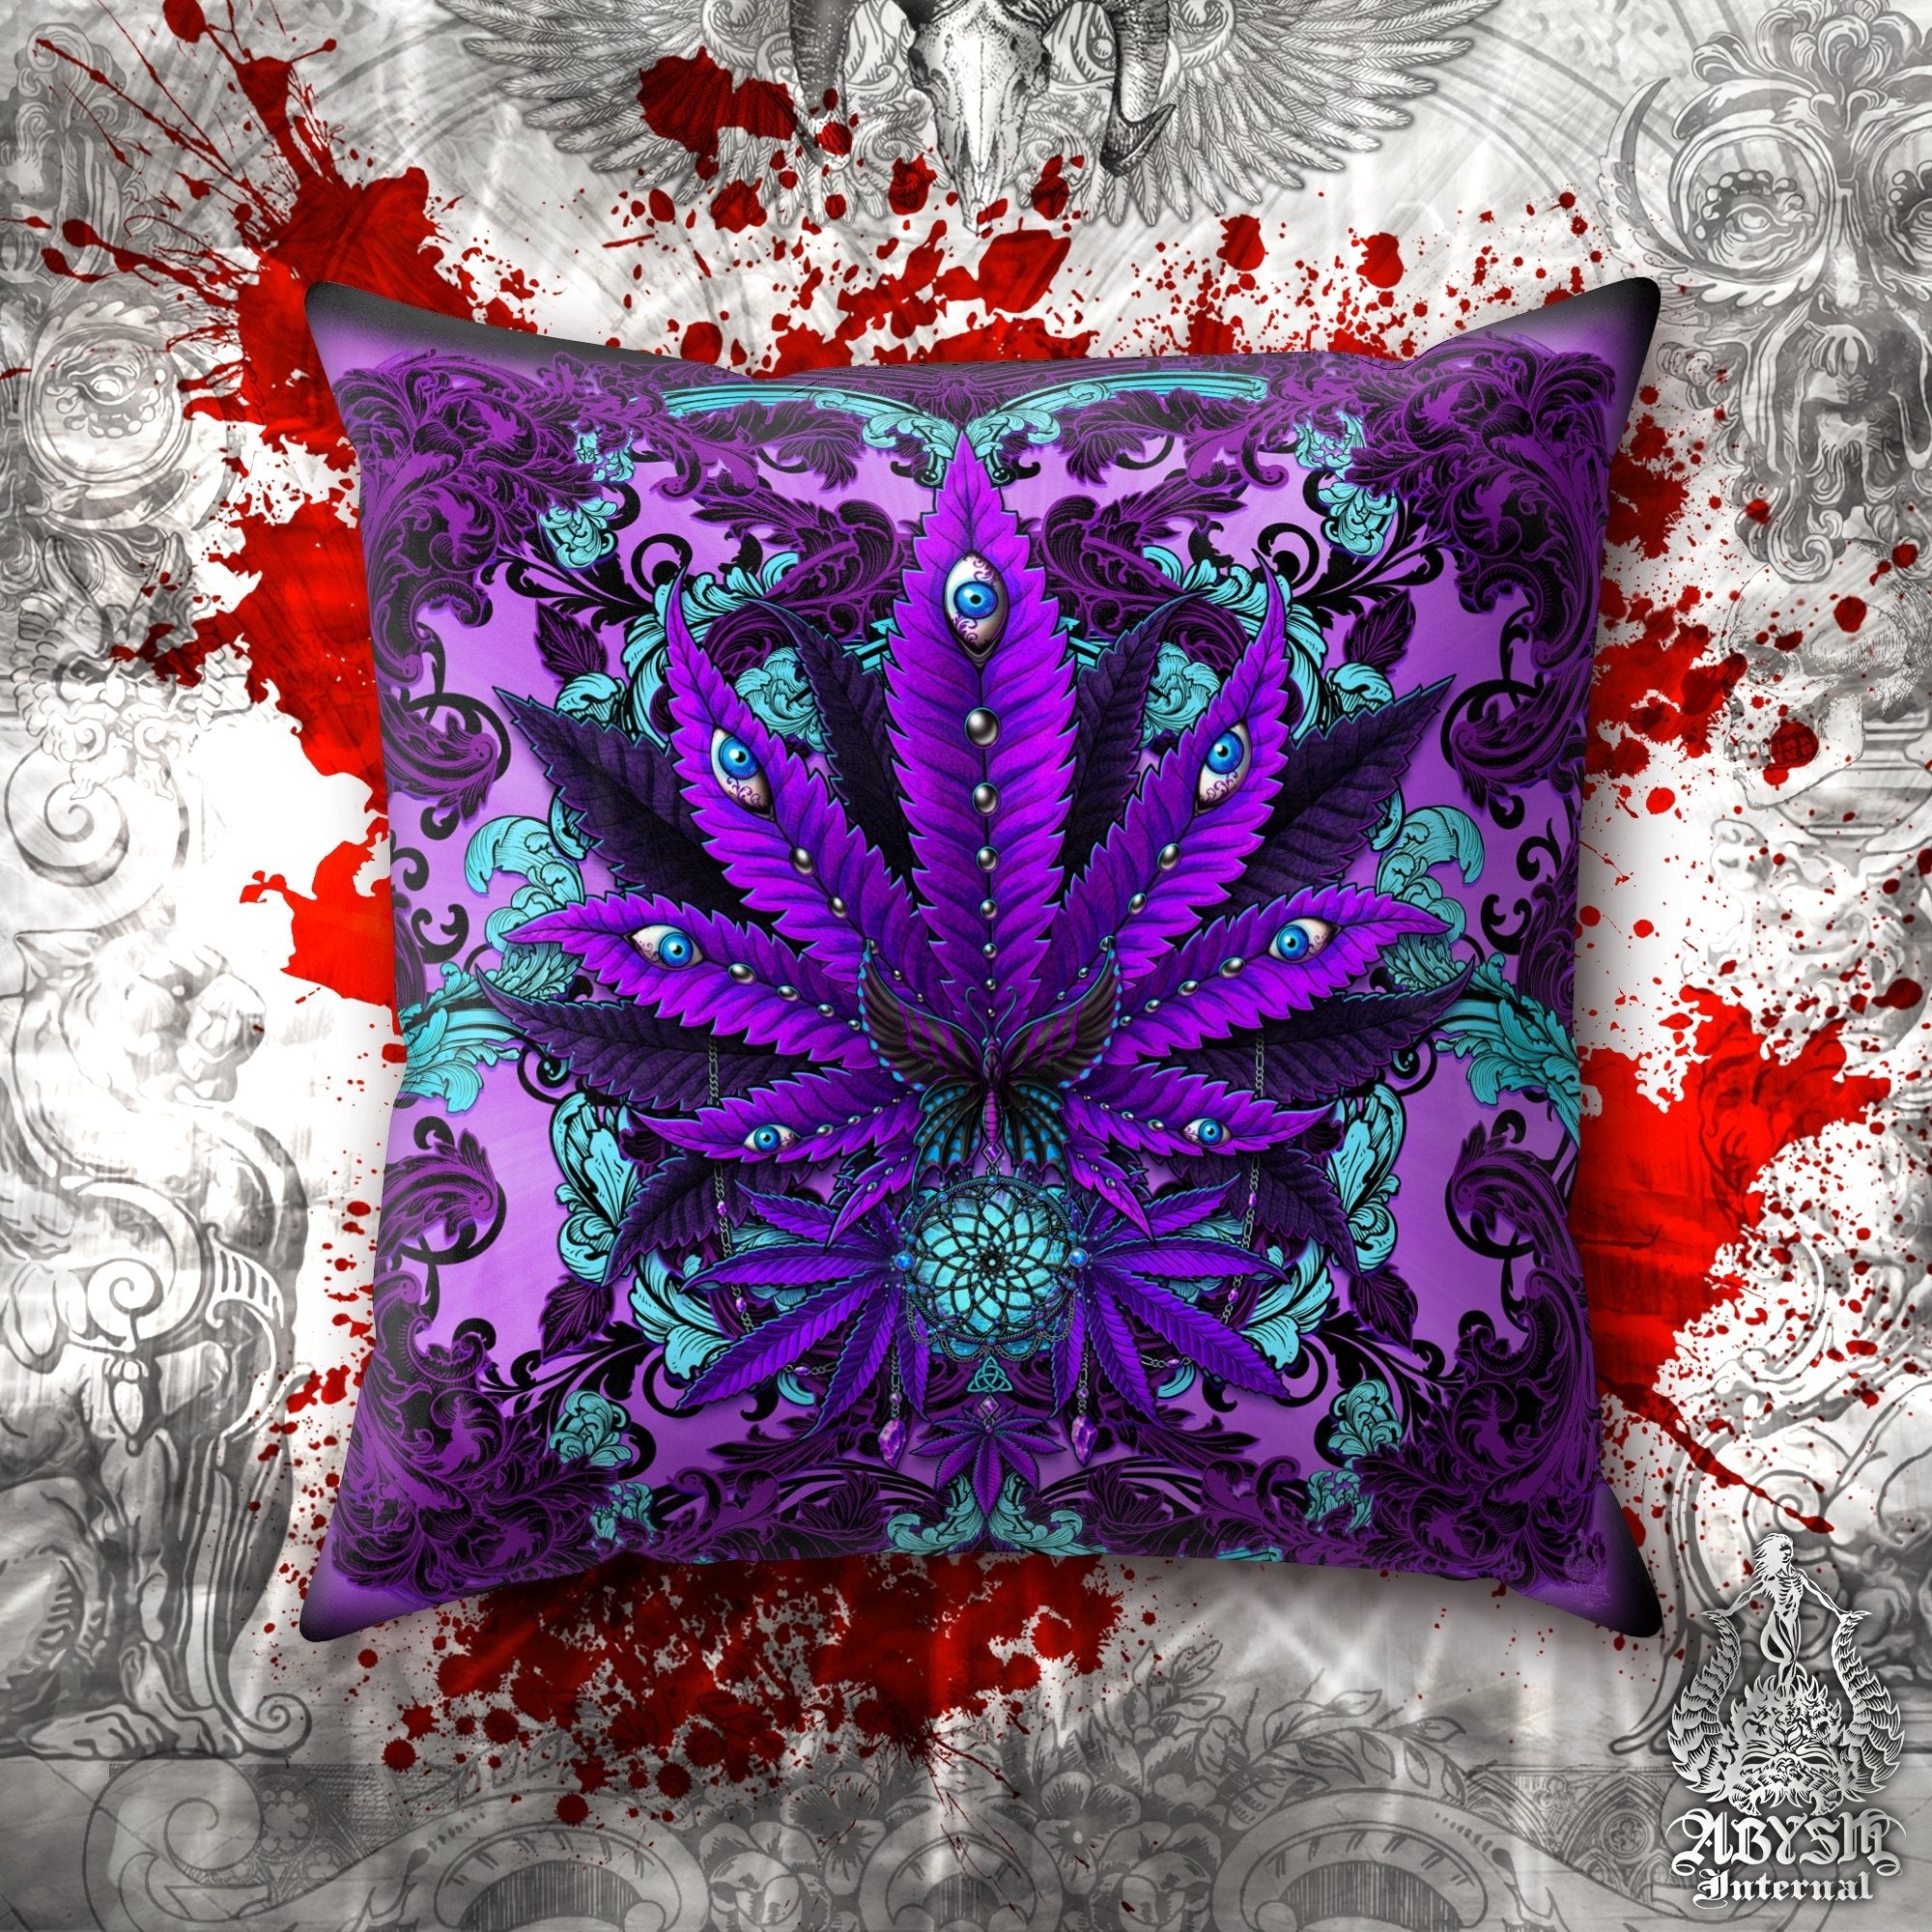 Pastel Goth Weed Throw Pillow, Cannabis Shop Decor, Decorative Accent Pillow, Square Cushion Cover, Alternative Room Decor, 420 Art Print - Abysm Internal